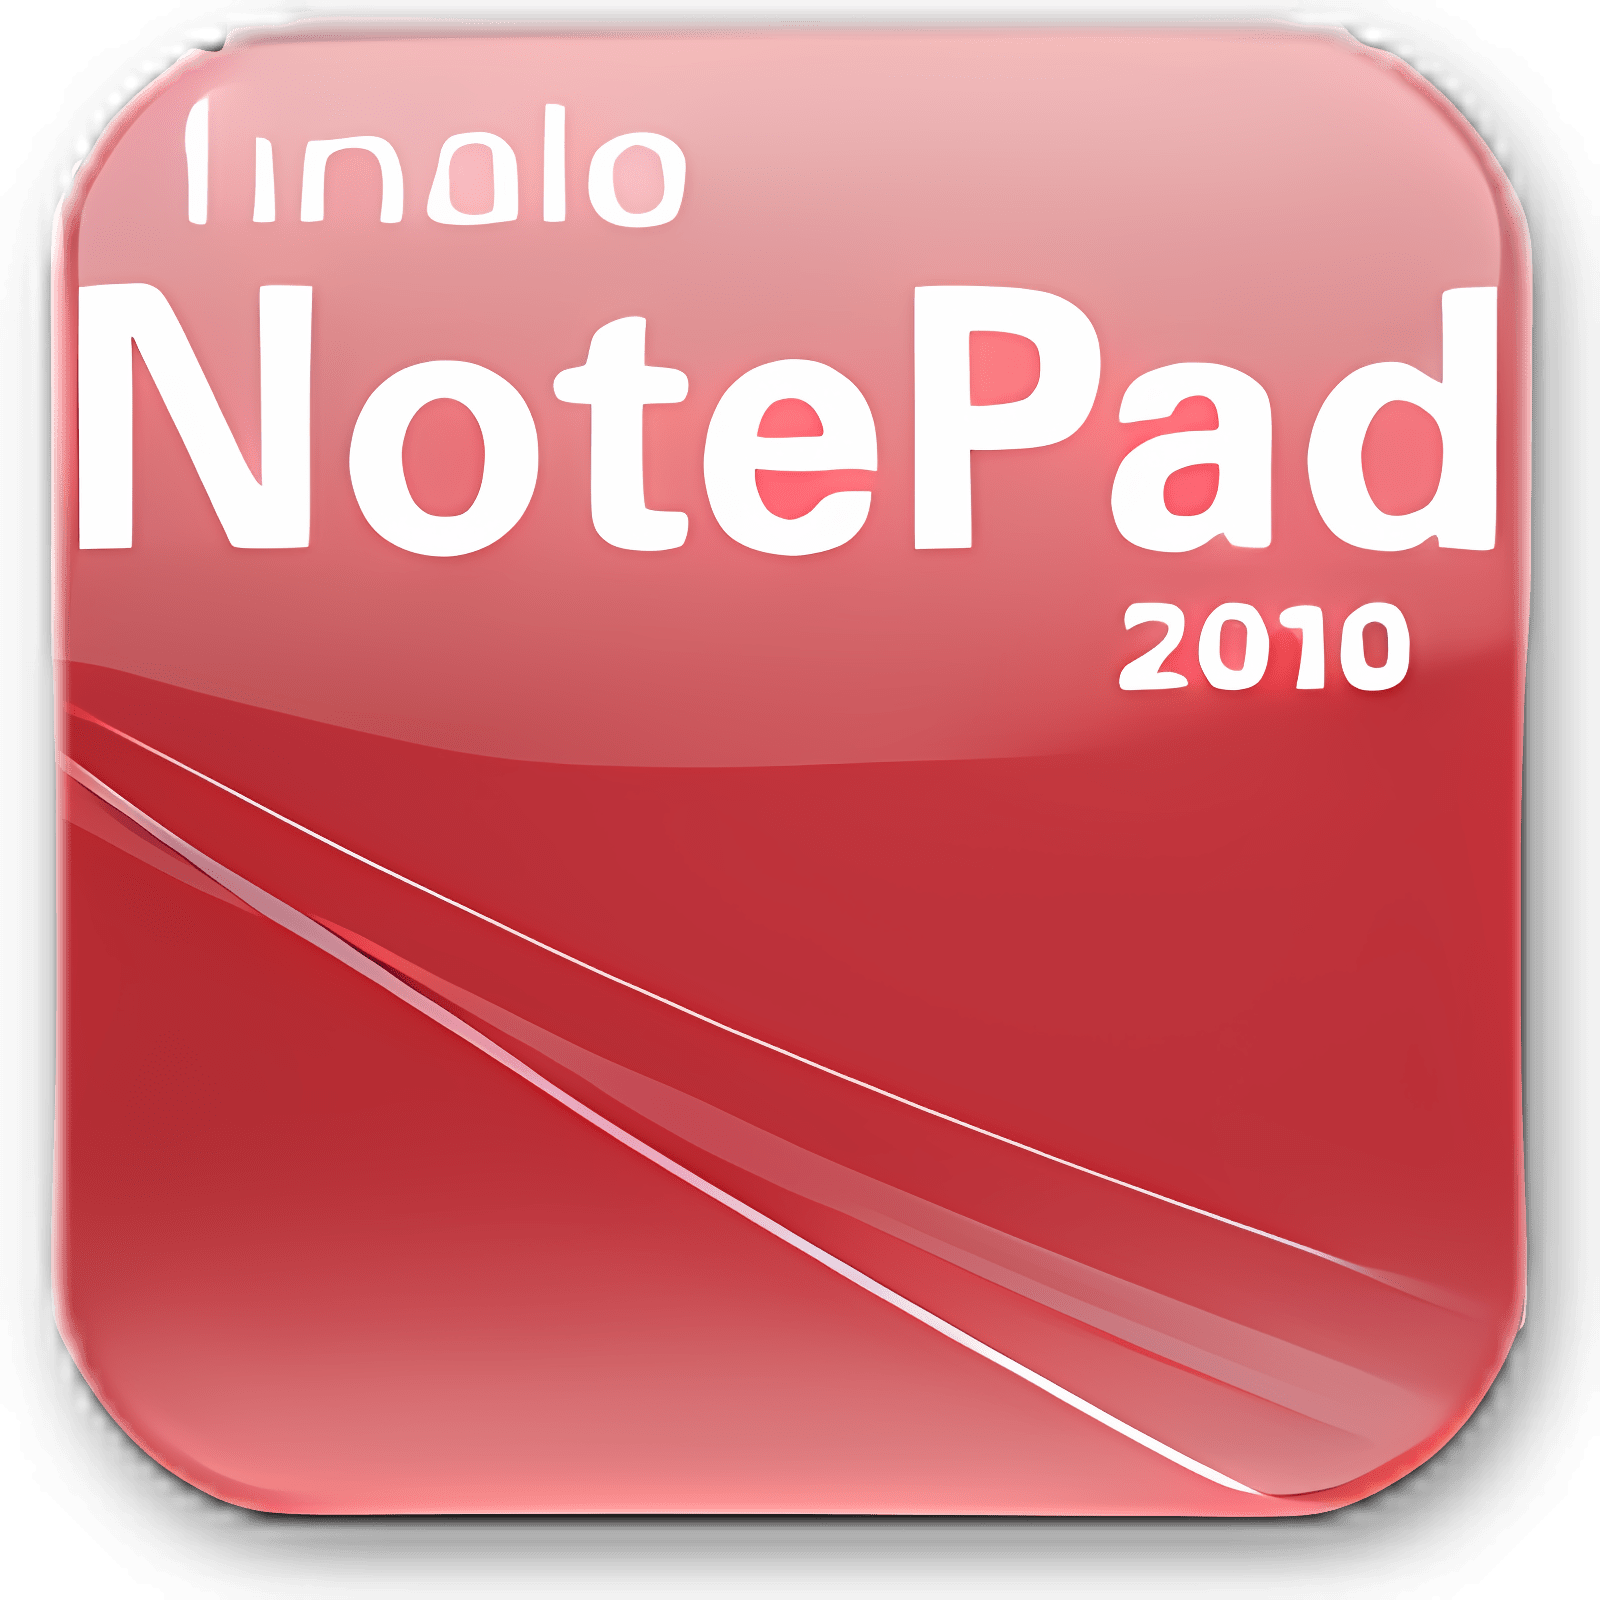 finale notepad 2012 download kostenlos